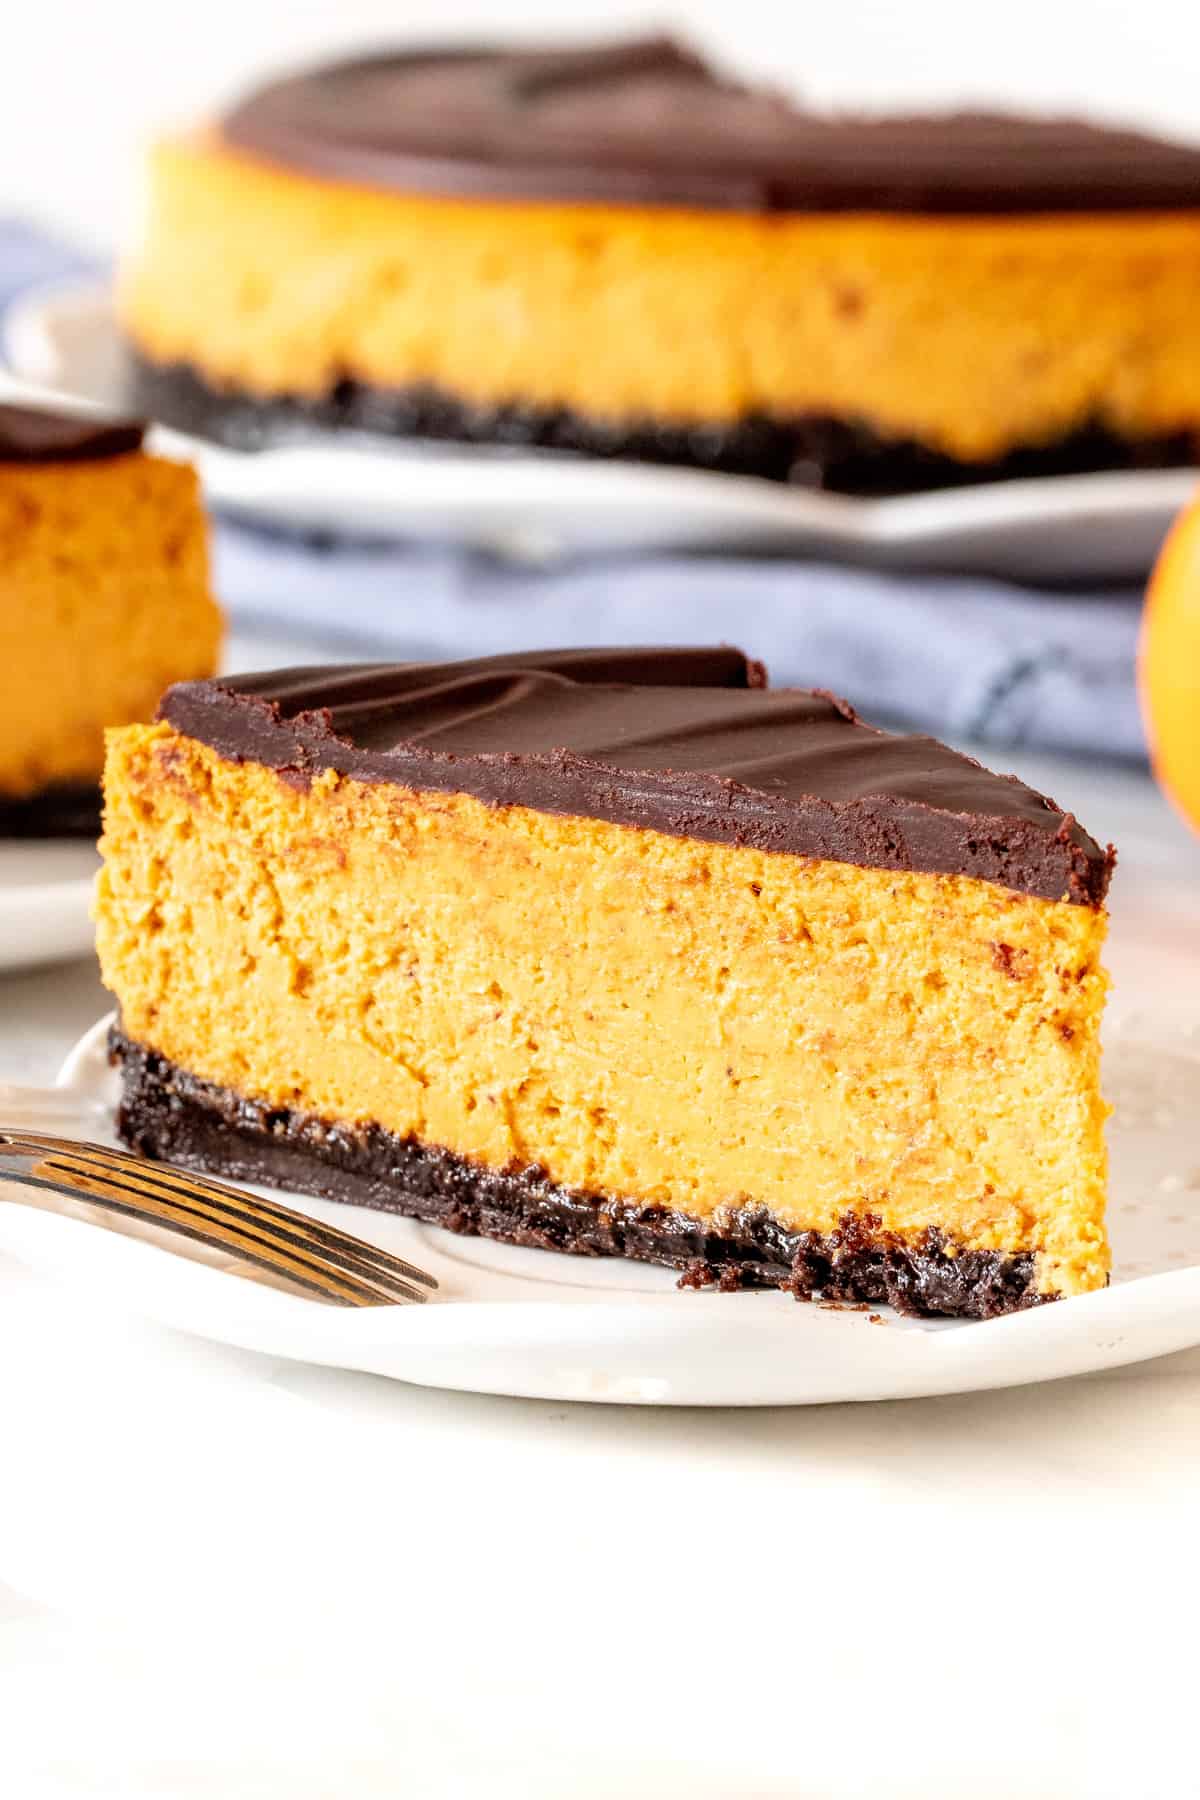 Slice of pumpkin cheesecake with chocolate ganache on top